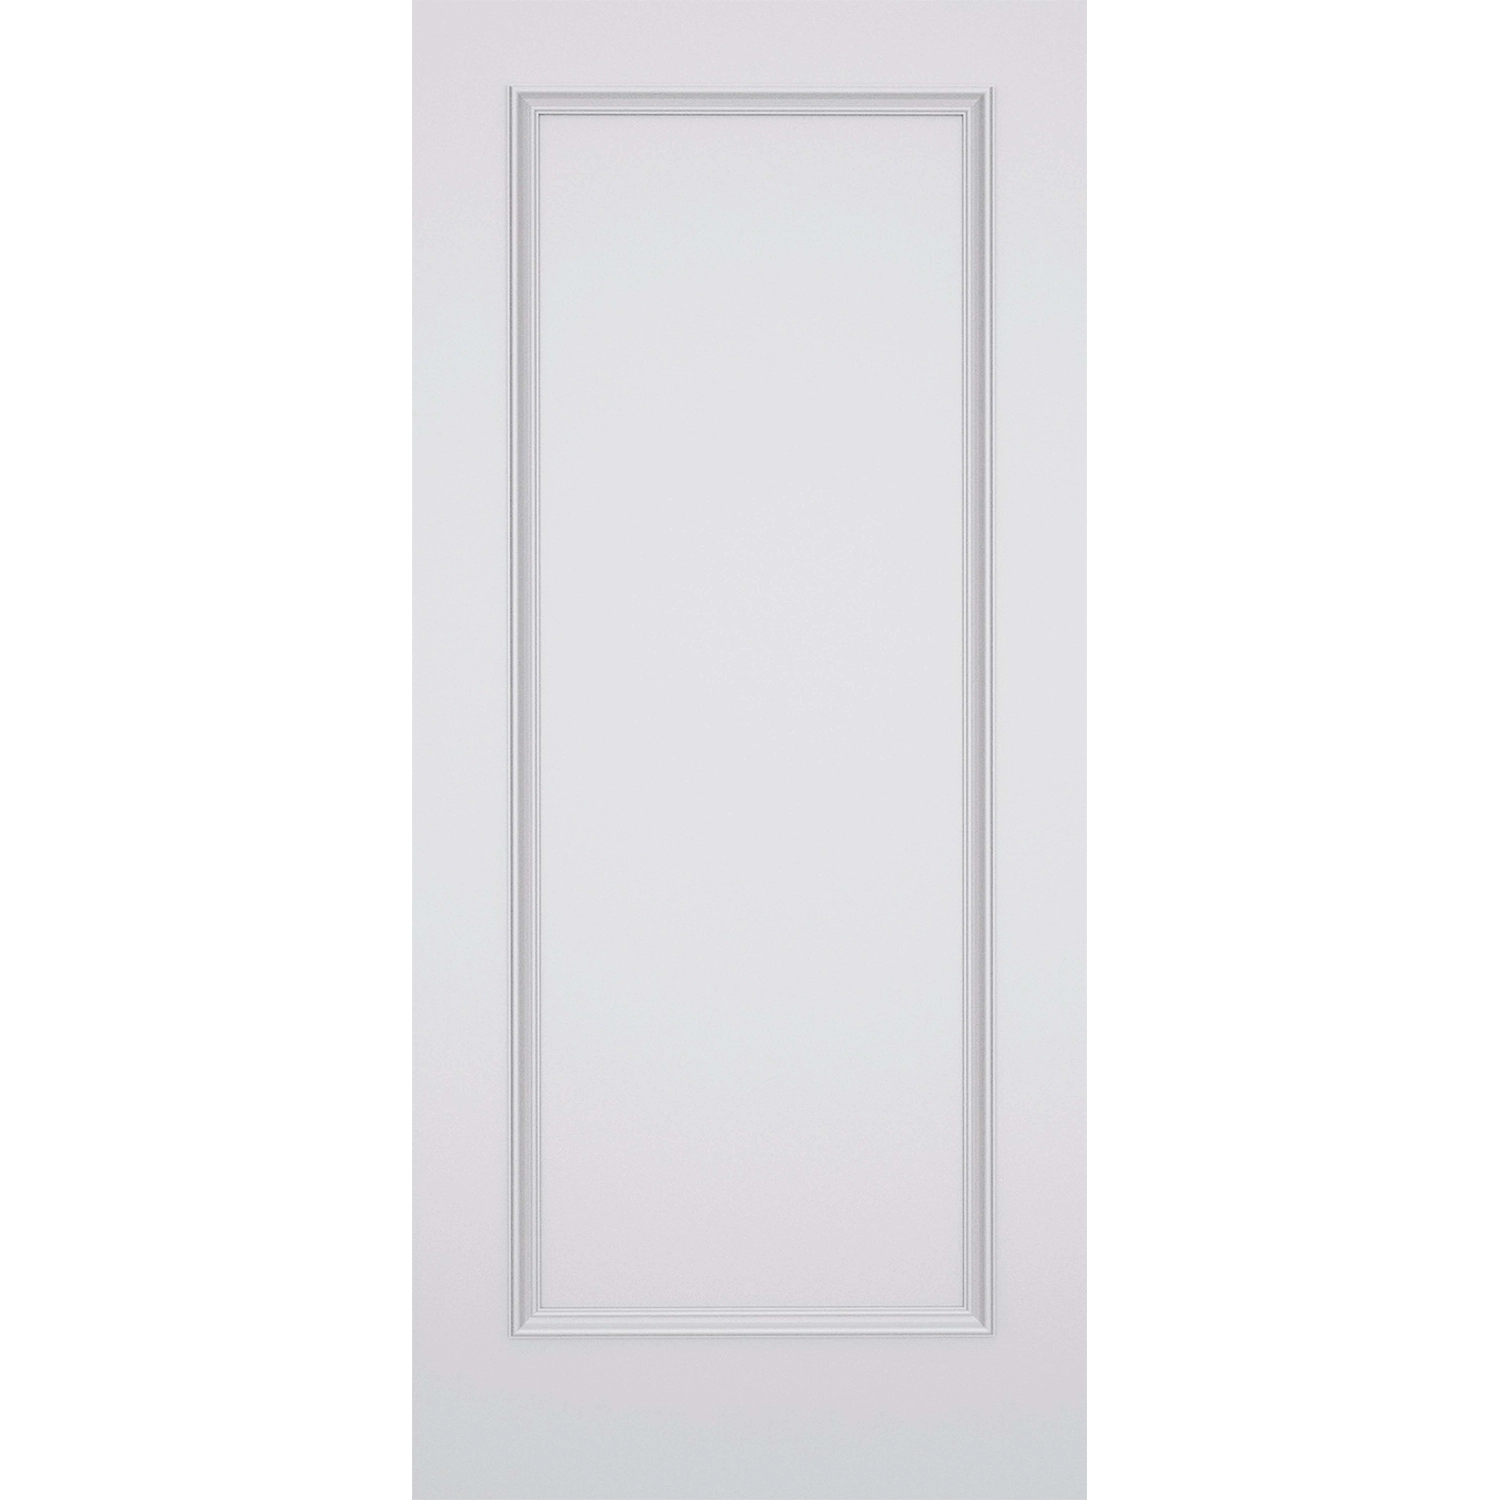 1 Panel 80 x 36 x 1-3/8 Smooth Hollow Door Raised